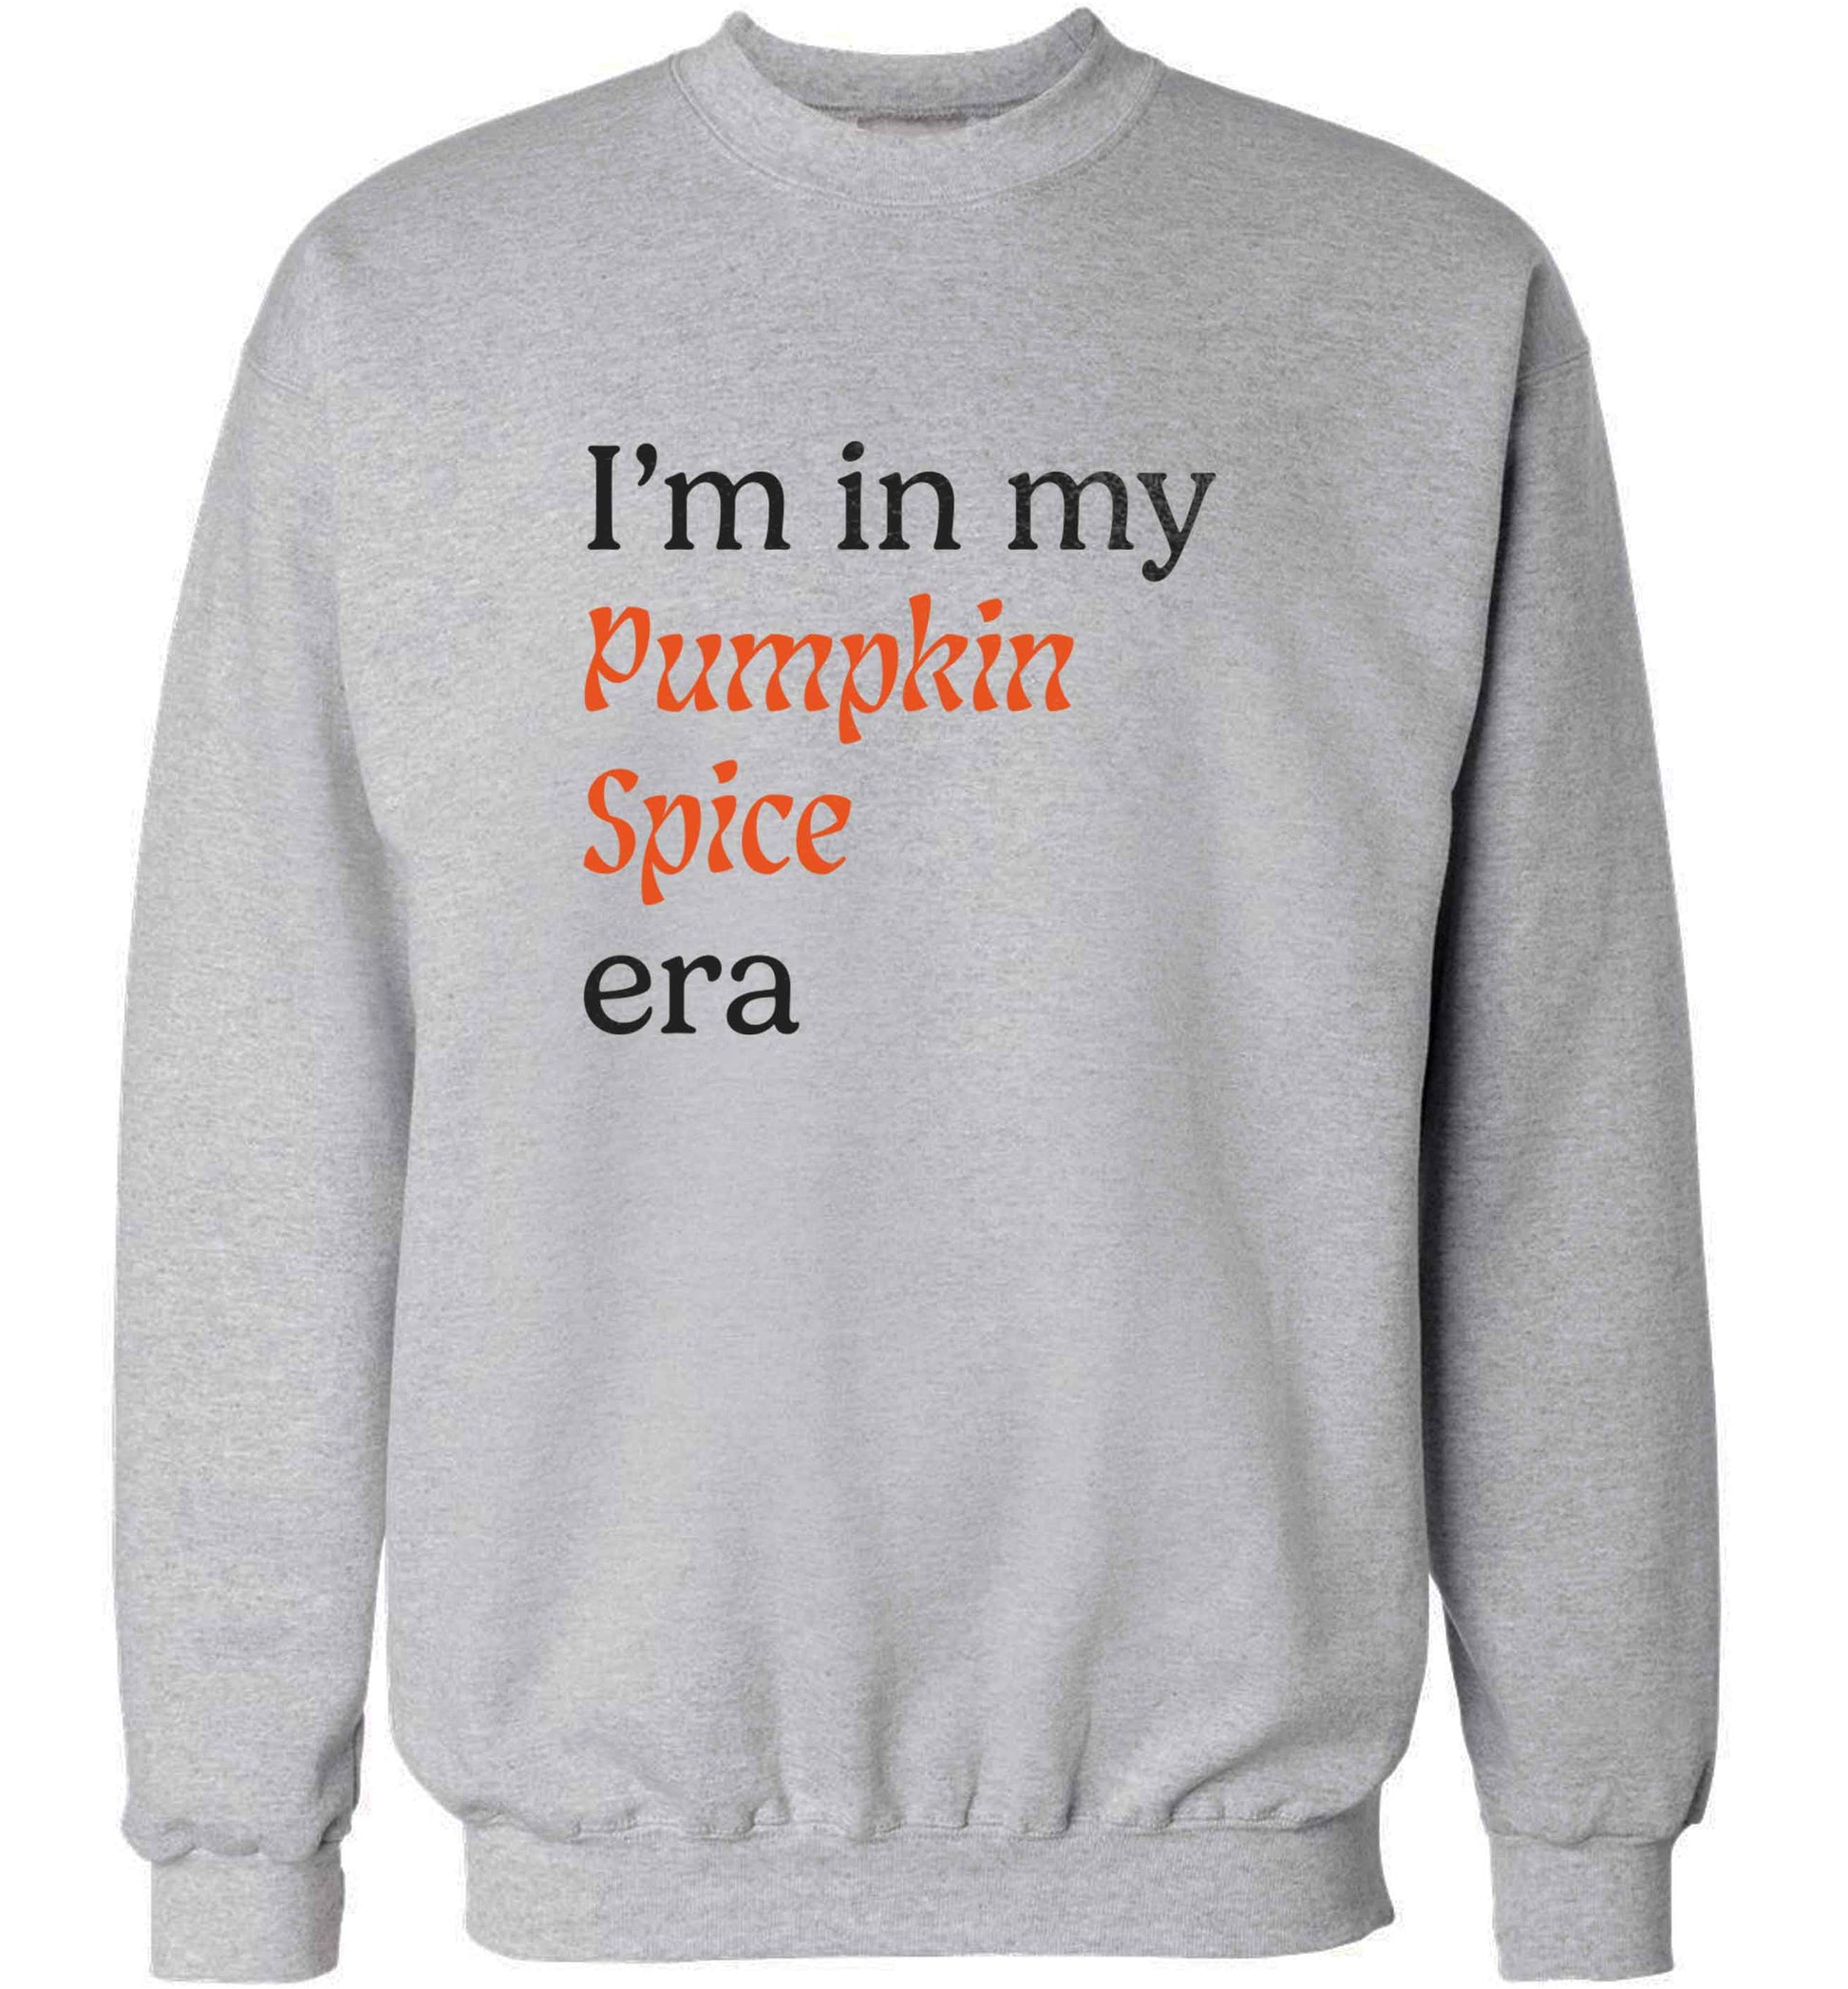 I'm in my pumpkin spice era Kit adult's unisex grey sweater 2XL